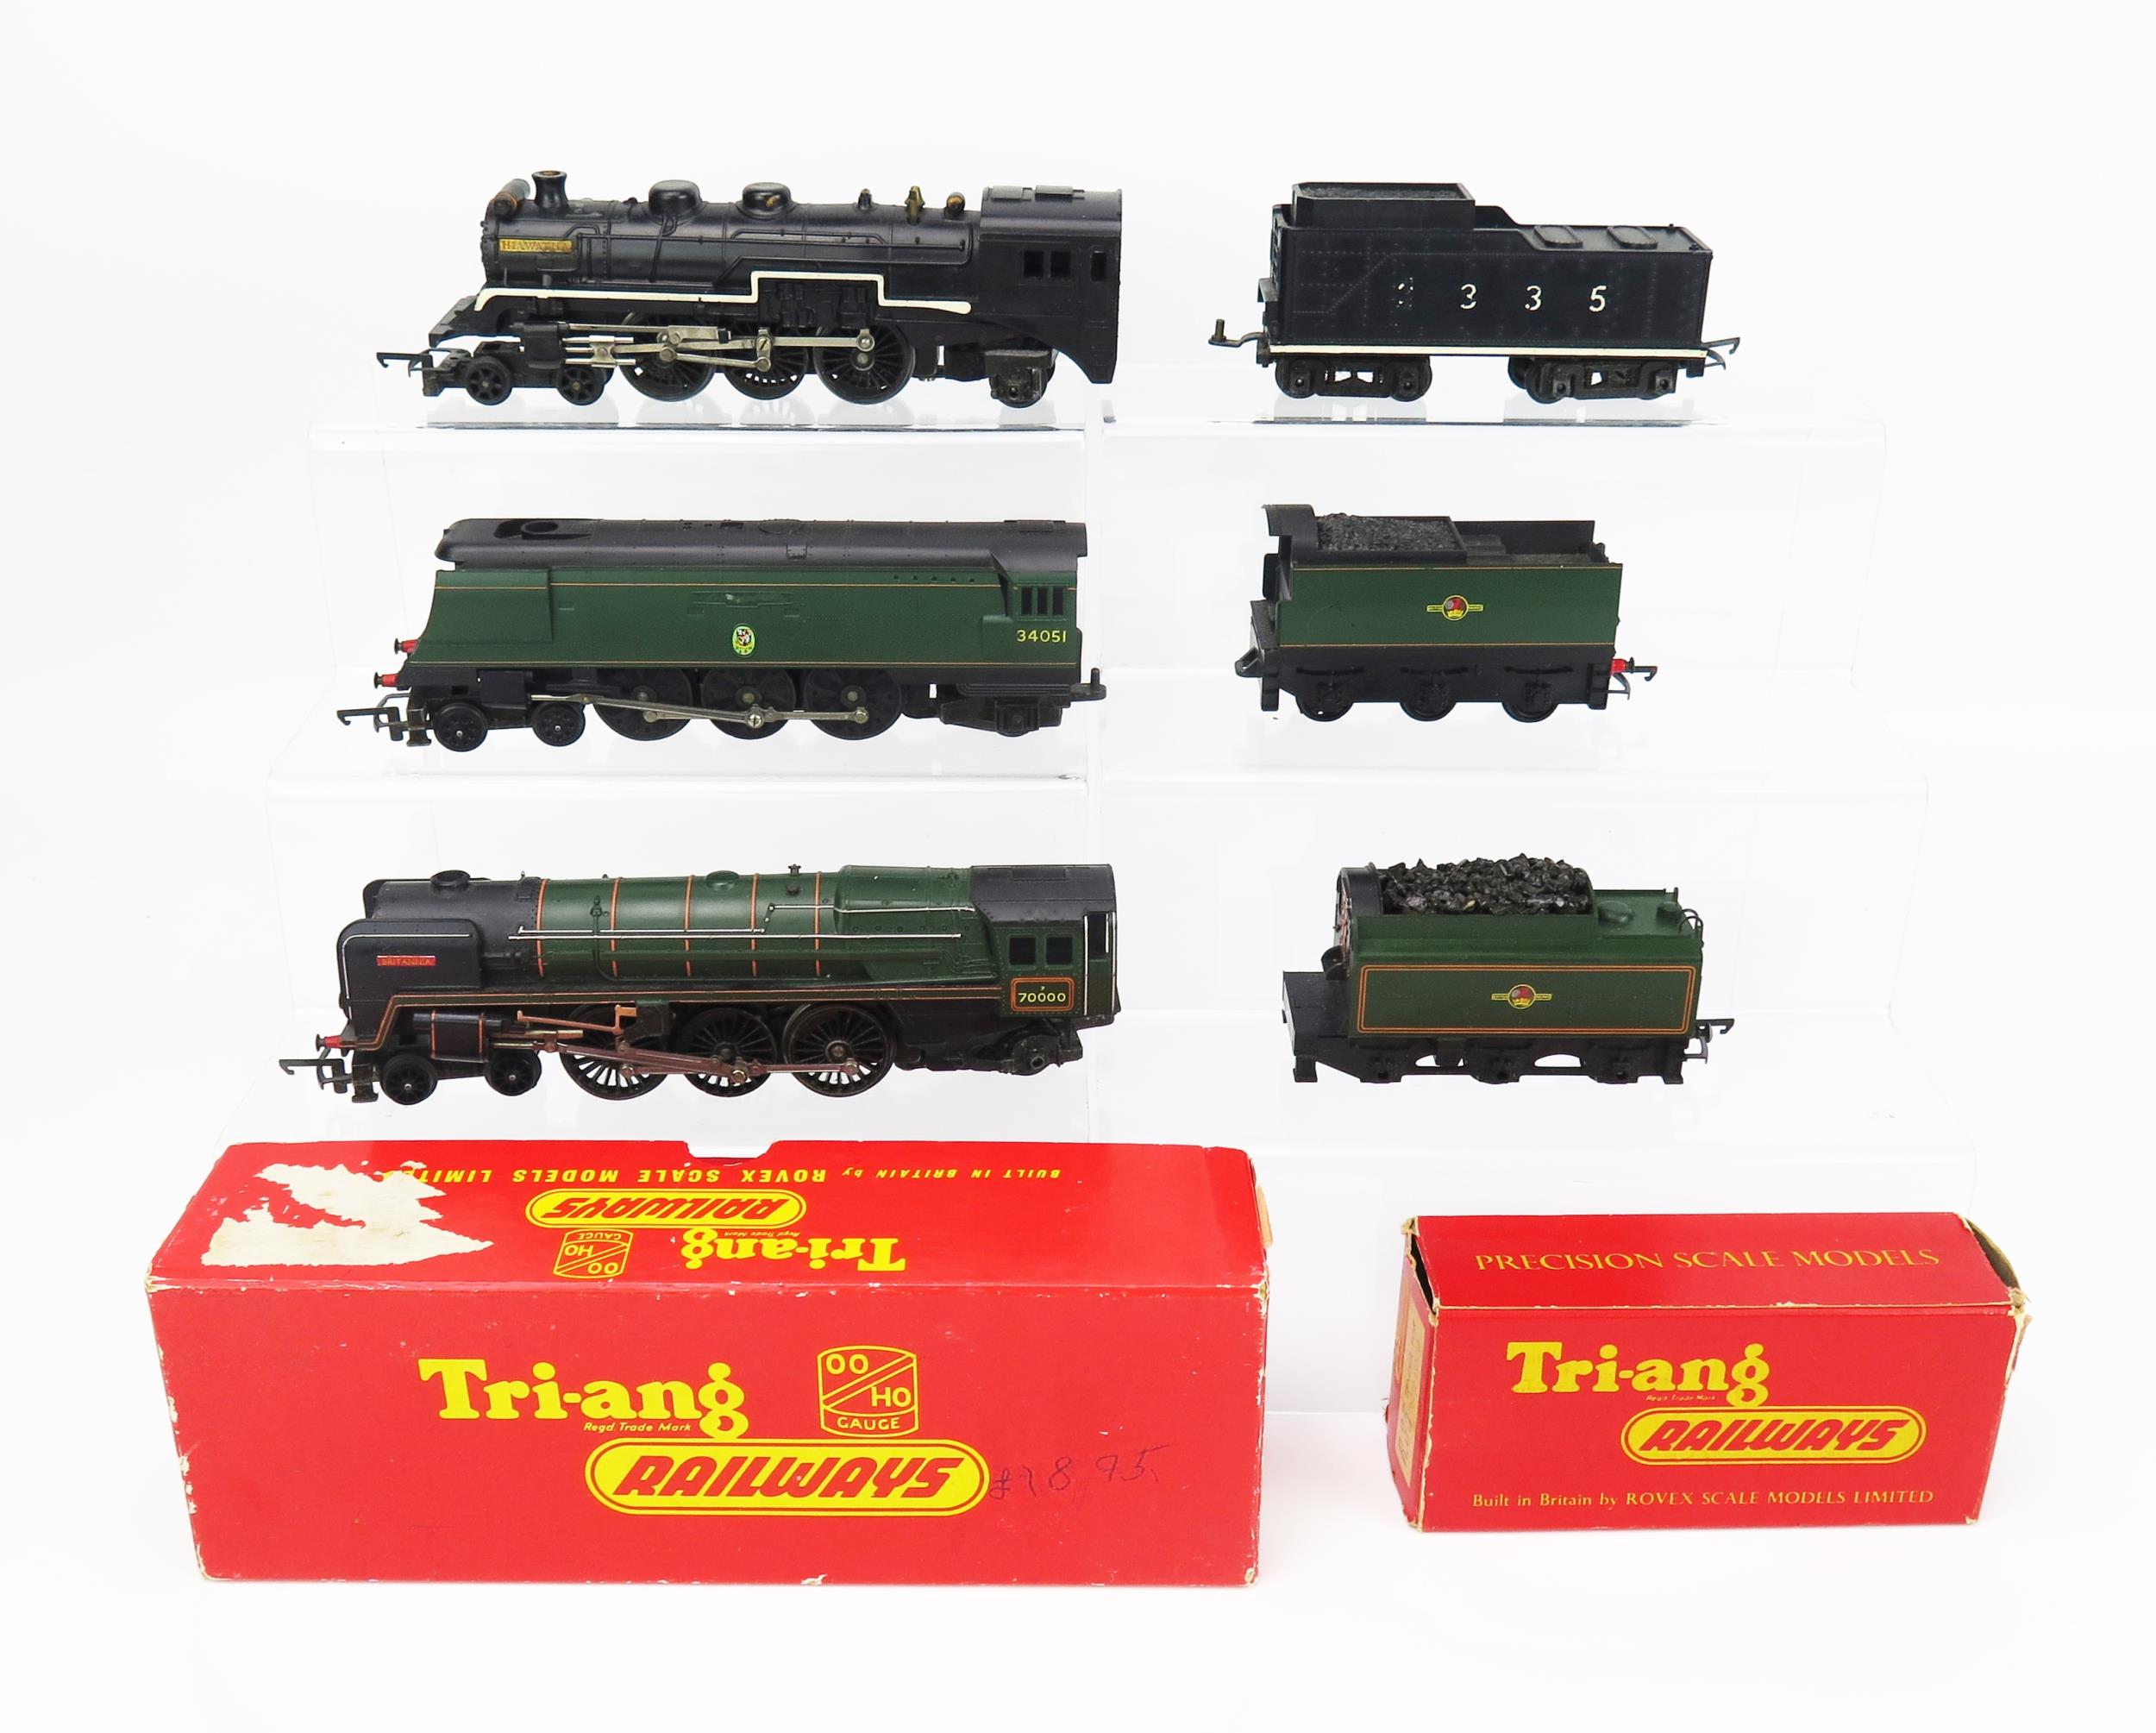 Triang Railways OO Gauge 4-6-2 Loco and Tender trio - (1) R259 4-6-2 "Britannia" BR Green 70000 with